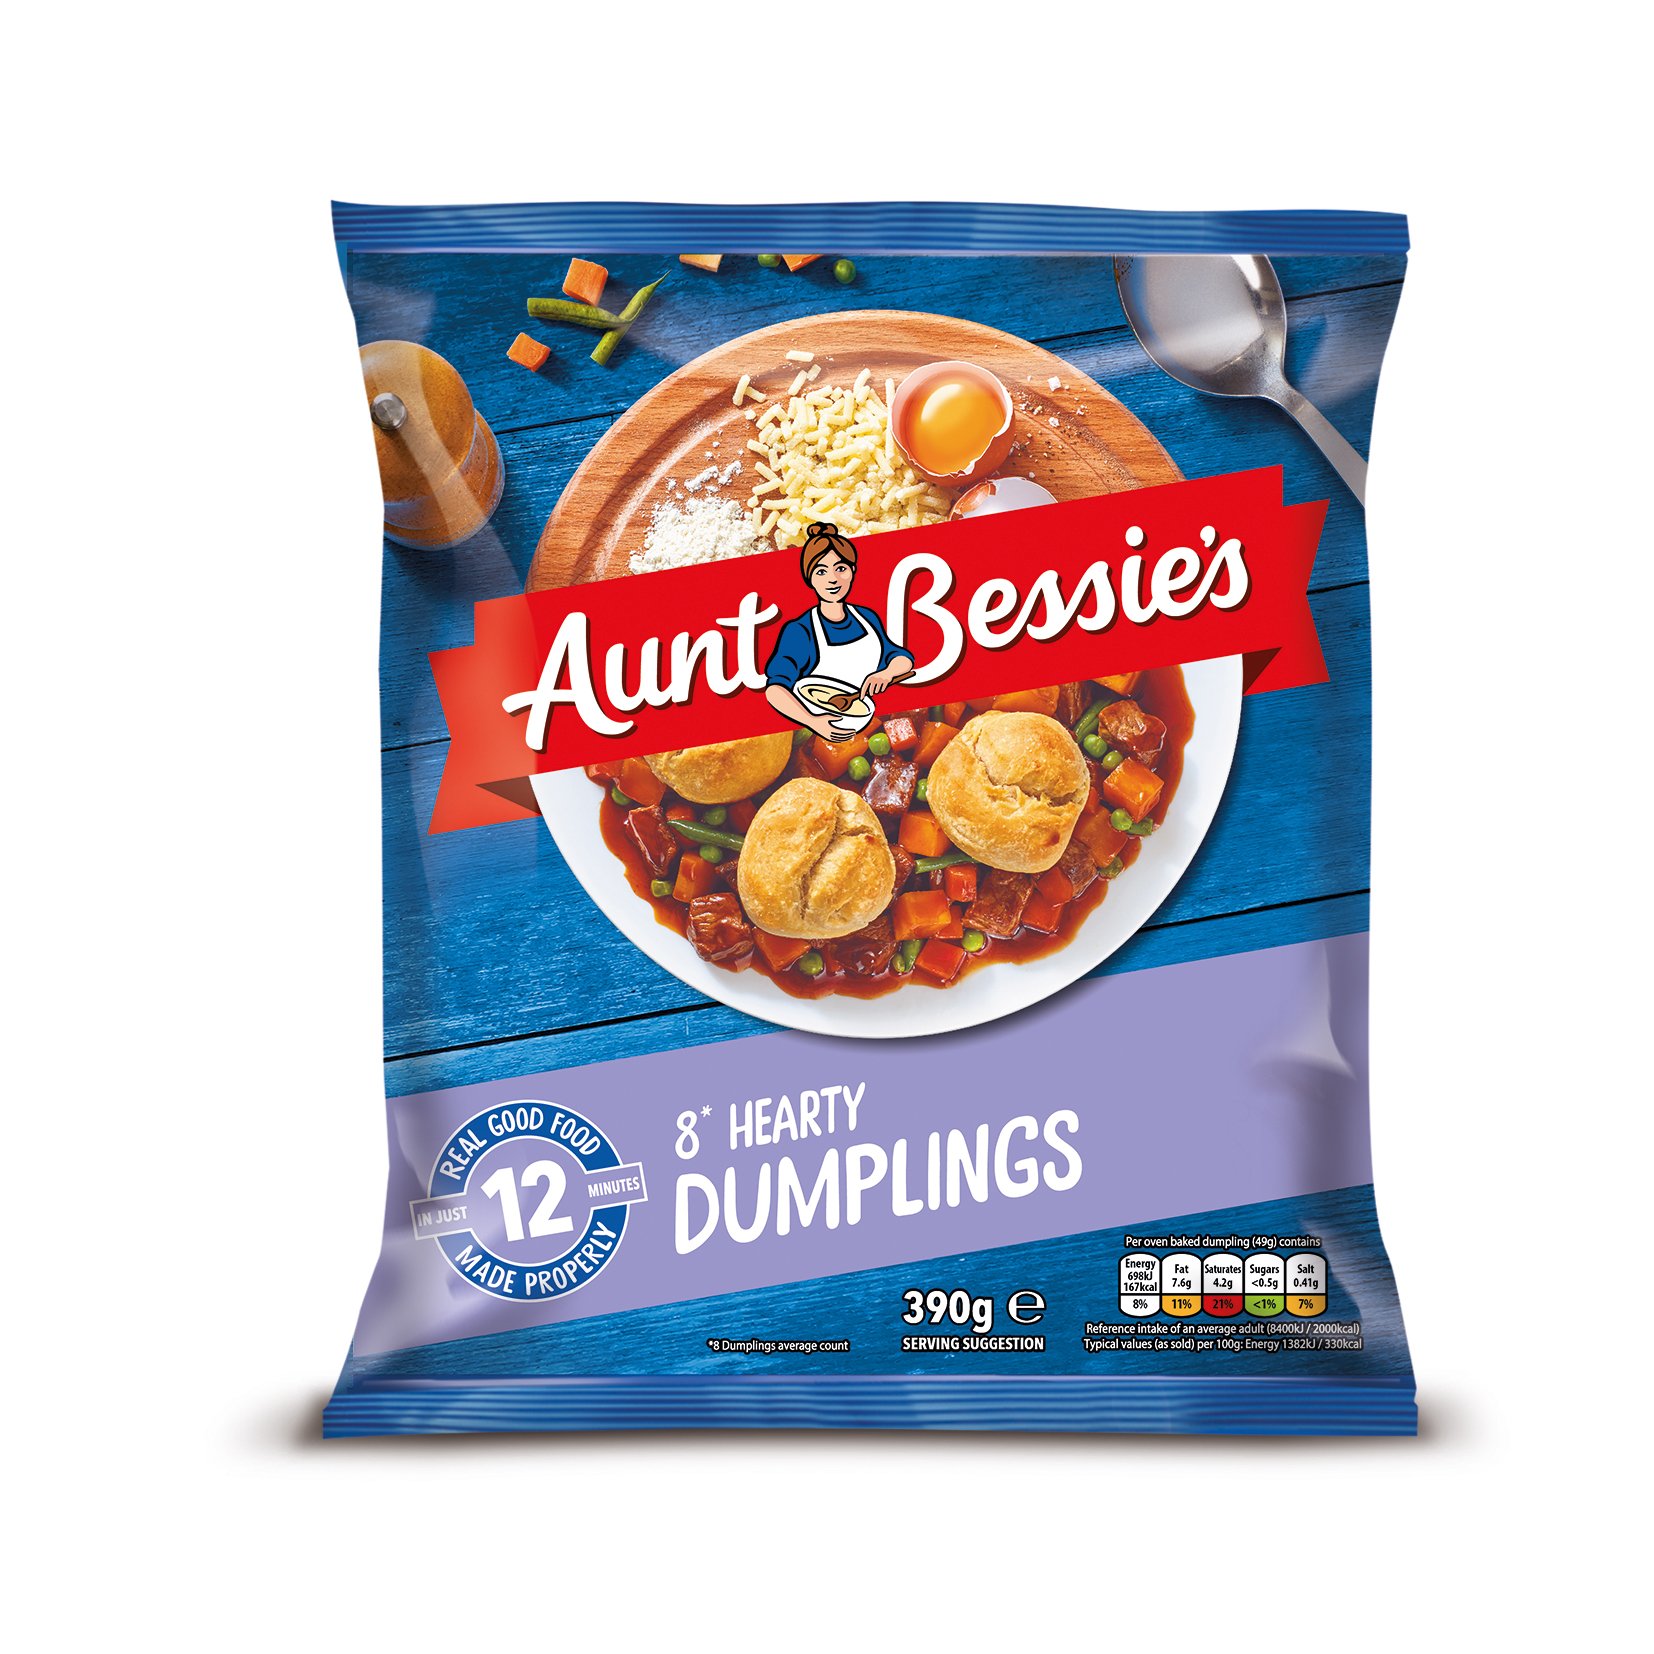 Aunt Bessie's 8 Light and Fluffy Dumplings